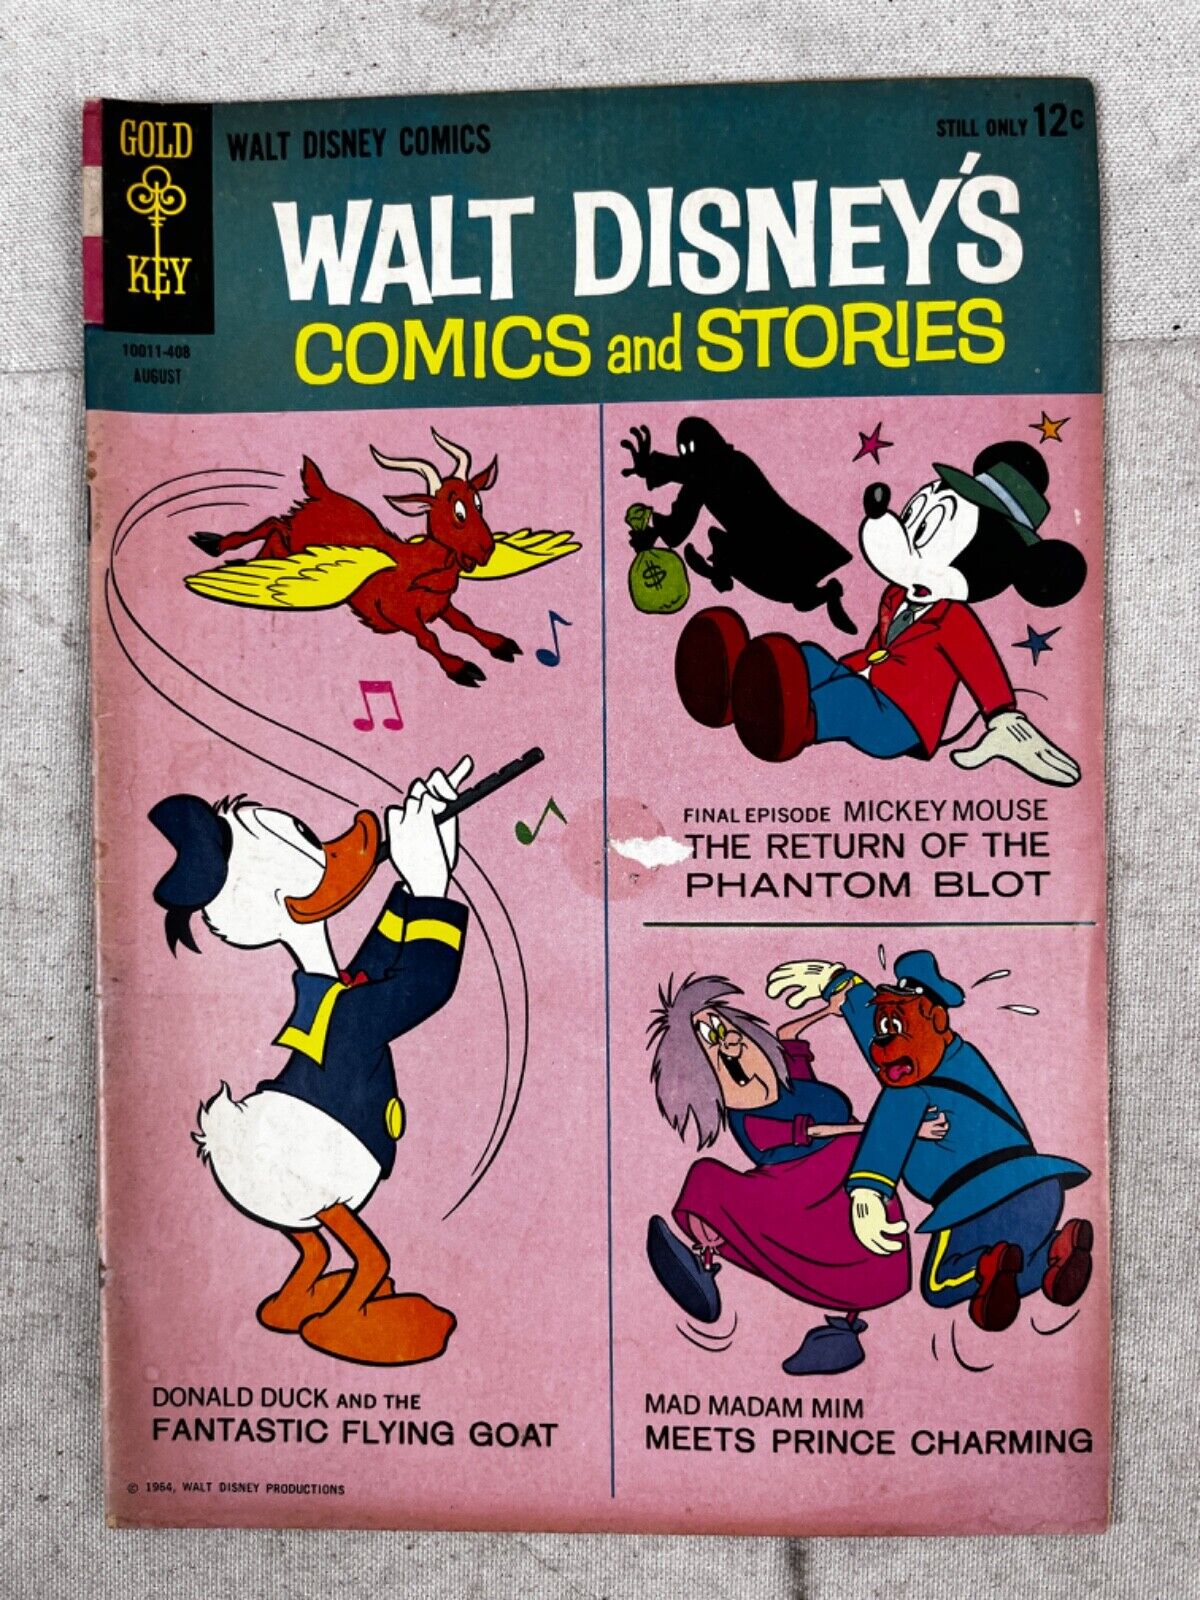 Vintage 1964 Walt Disney's Comics & Stories, Vol 24 #11 August Pre-Owned